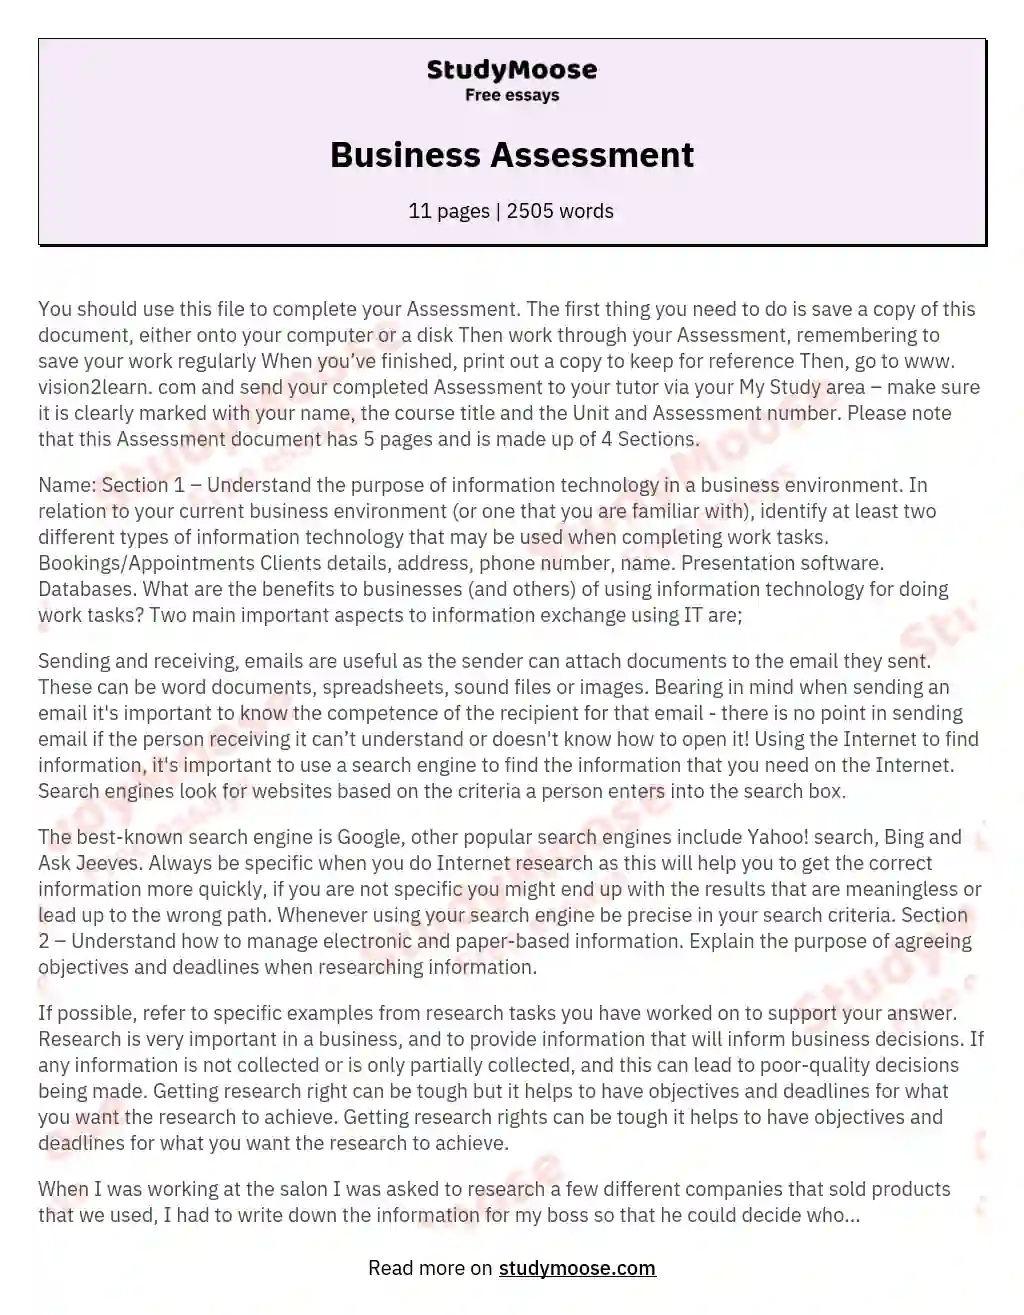 Business Assessment essay